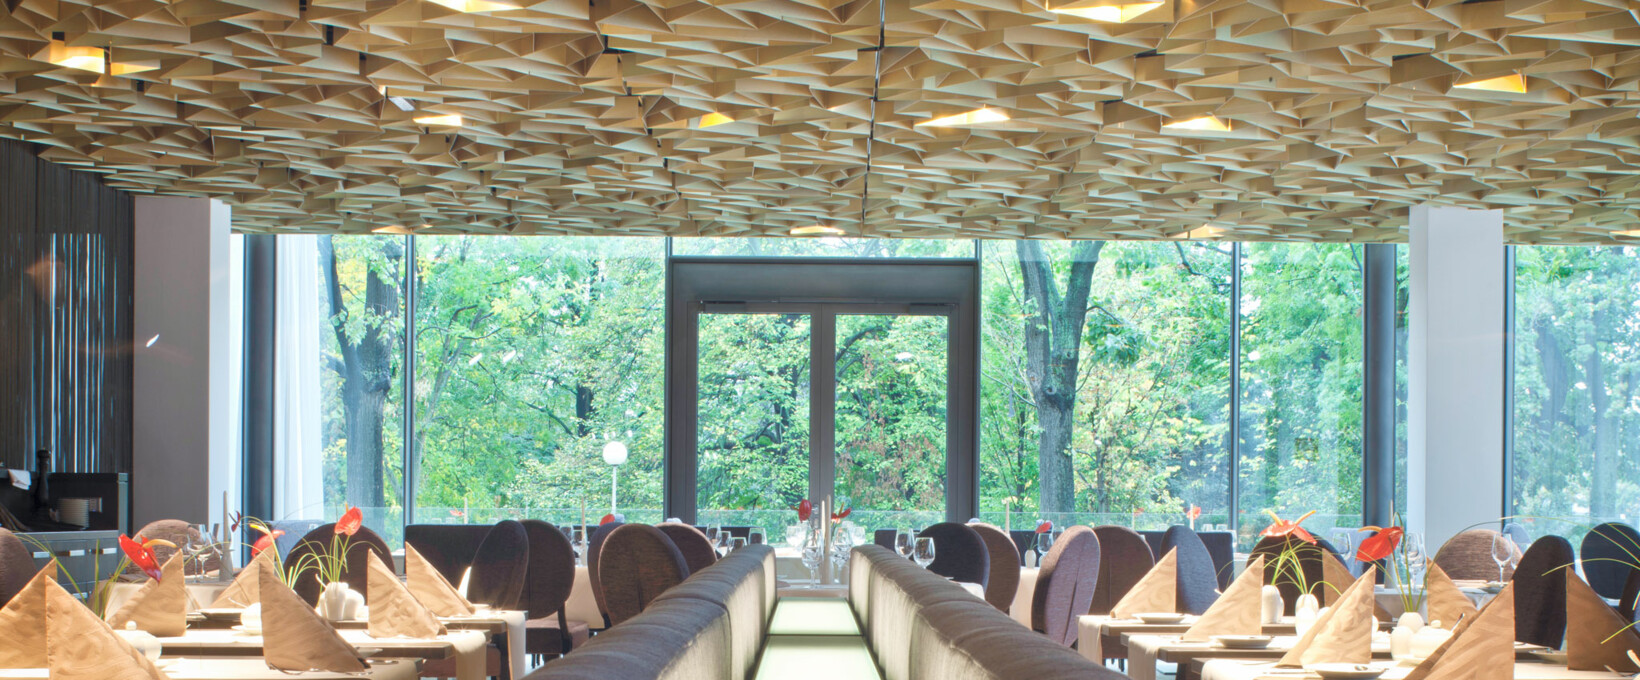 Restaurant Regio with laid table | Radisson Blu Park Royal Palace Hotel in Vienna